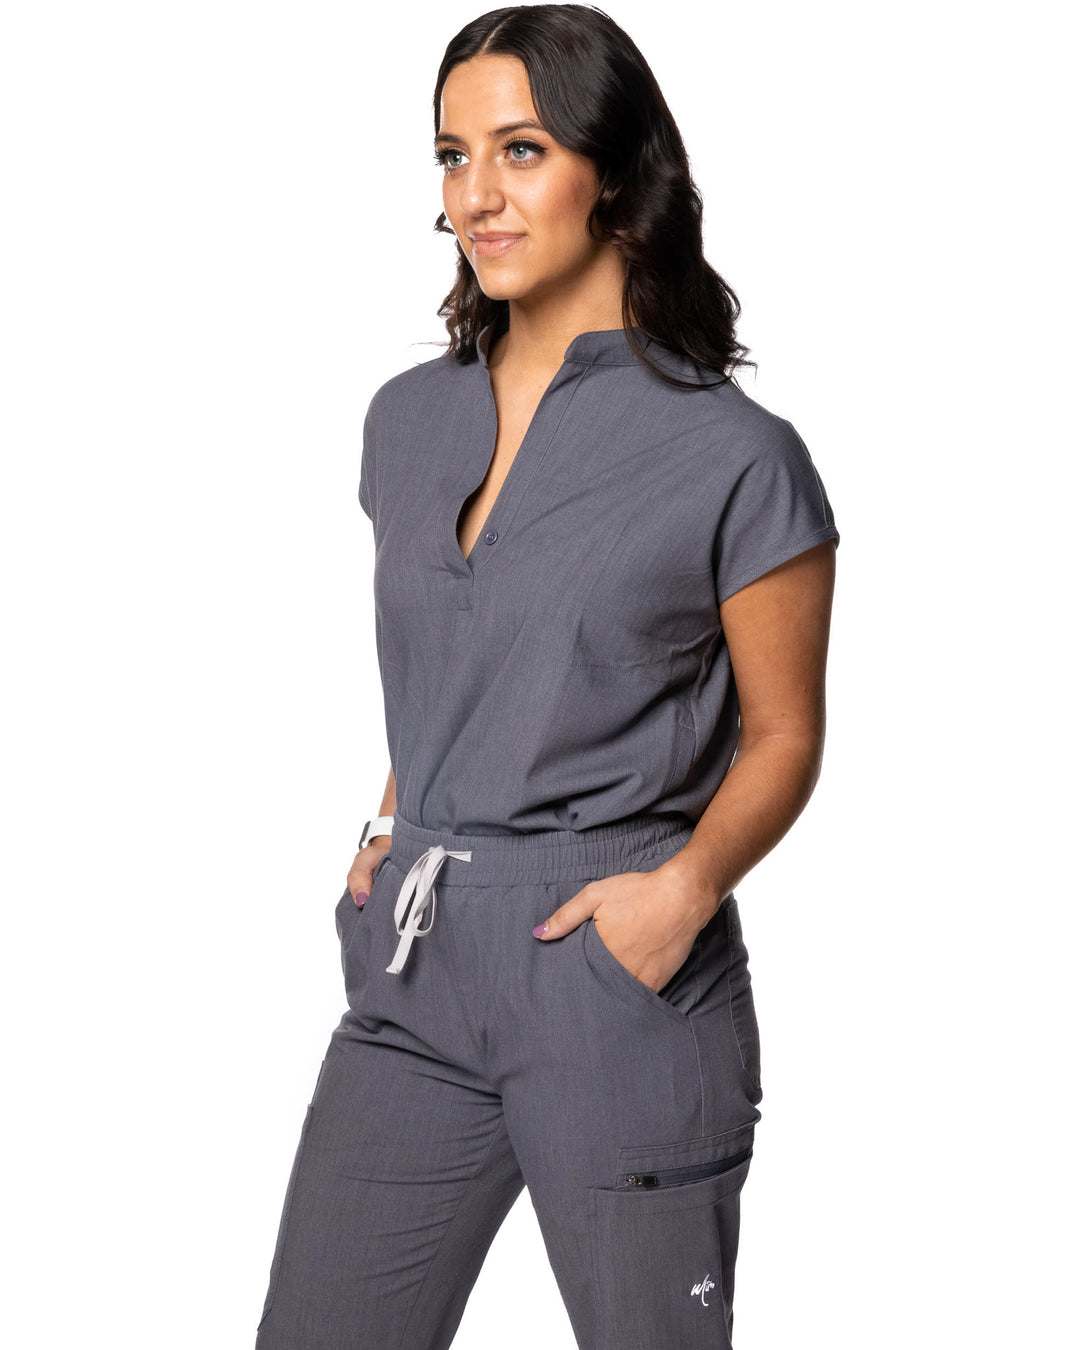 women's Gray Scrub Top - Jogger Scrubs by Mim Scrubs - Millennials In Medicine